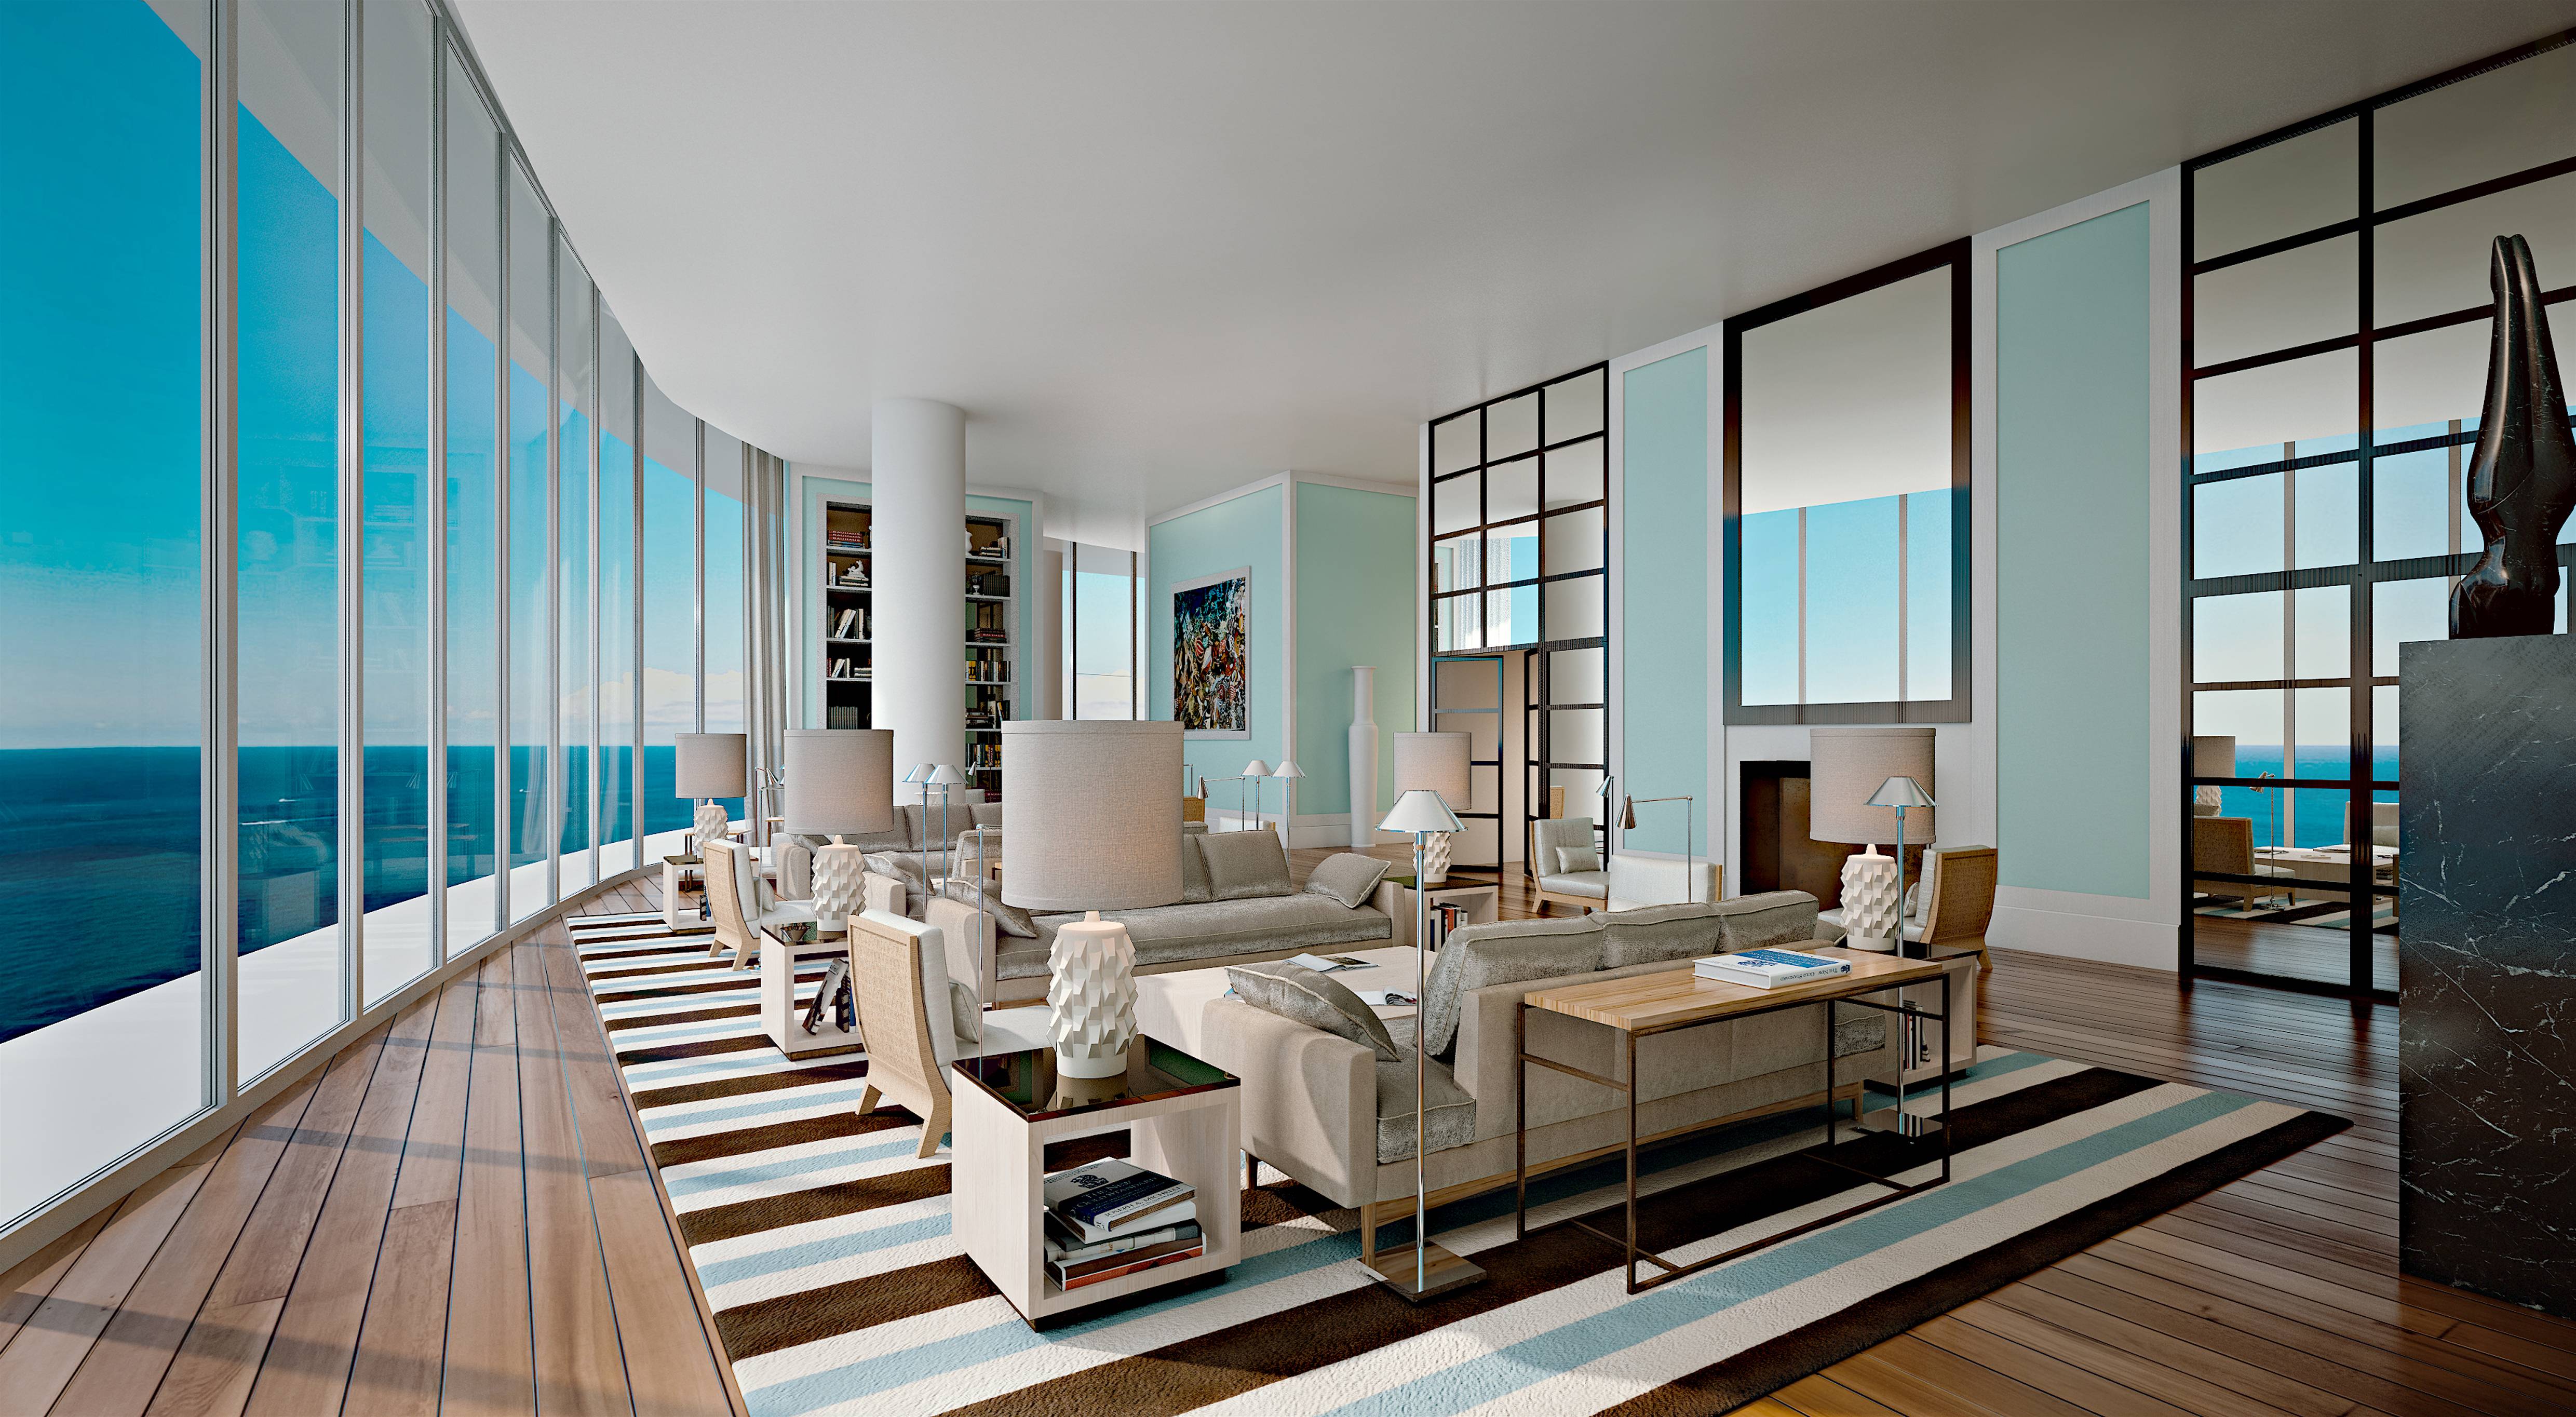 Mia Ritz Carlton Sunny Isles Sells Record Breaking Penthouse